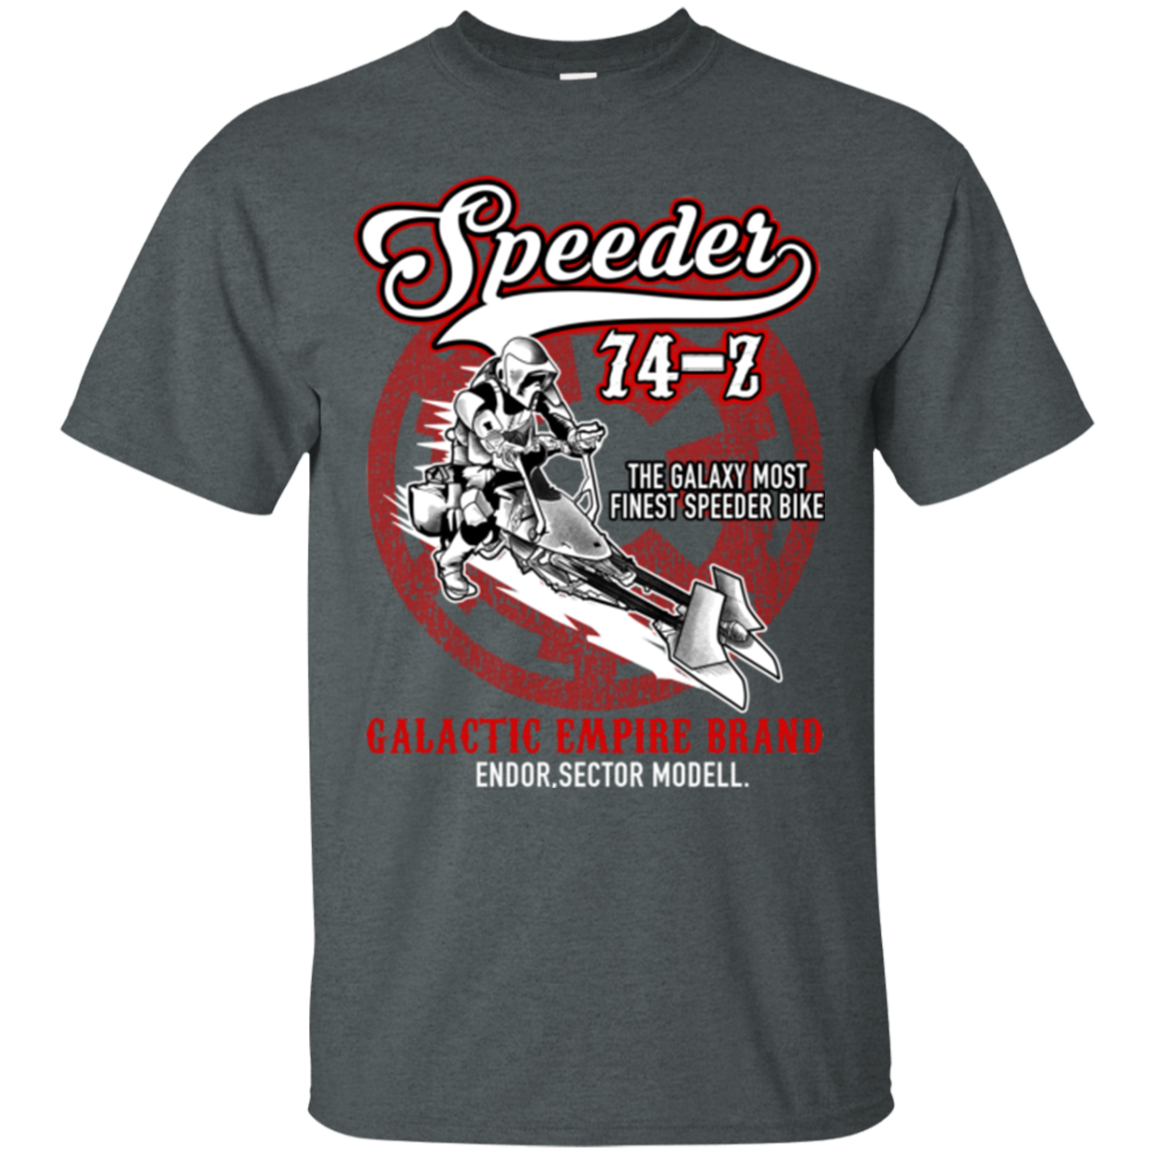 The Speeder T-Shirt